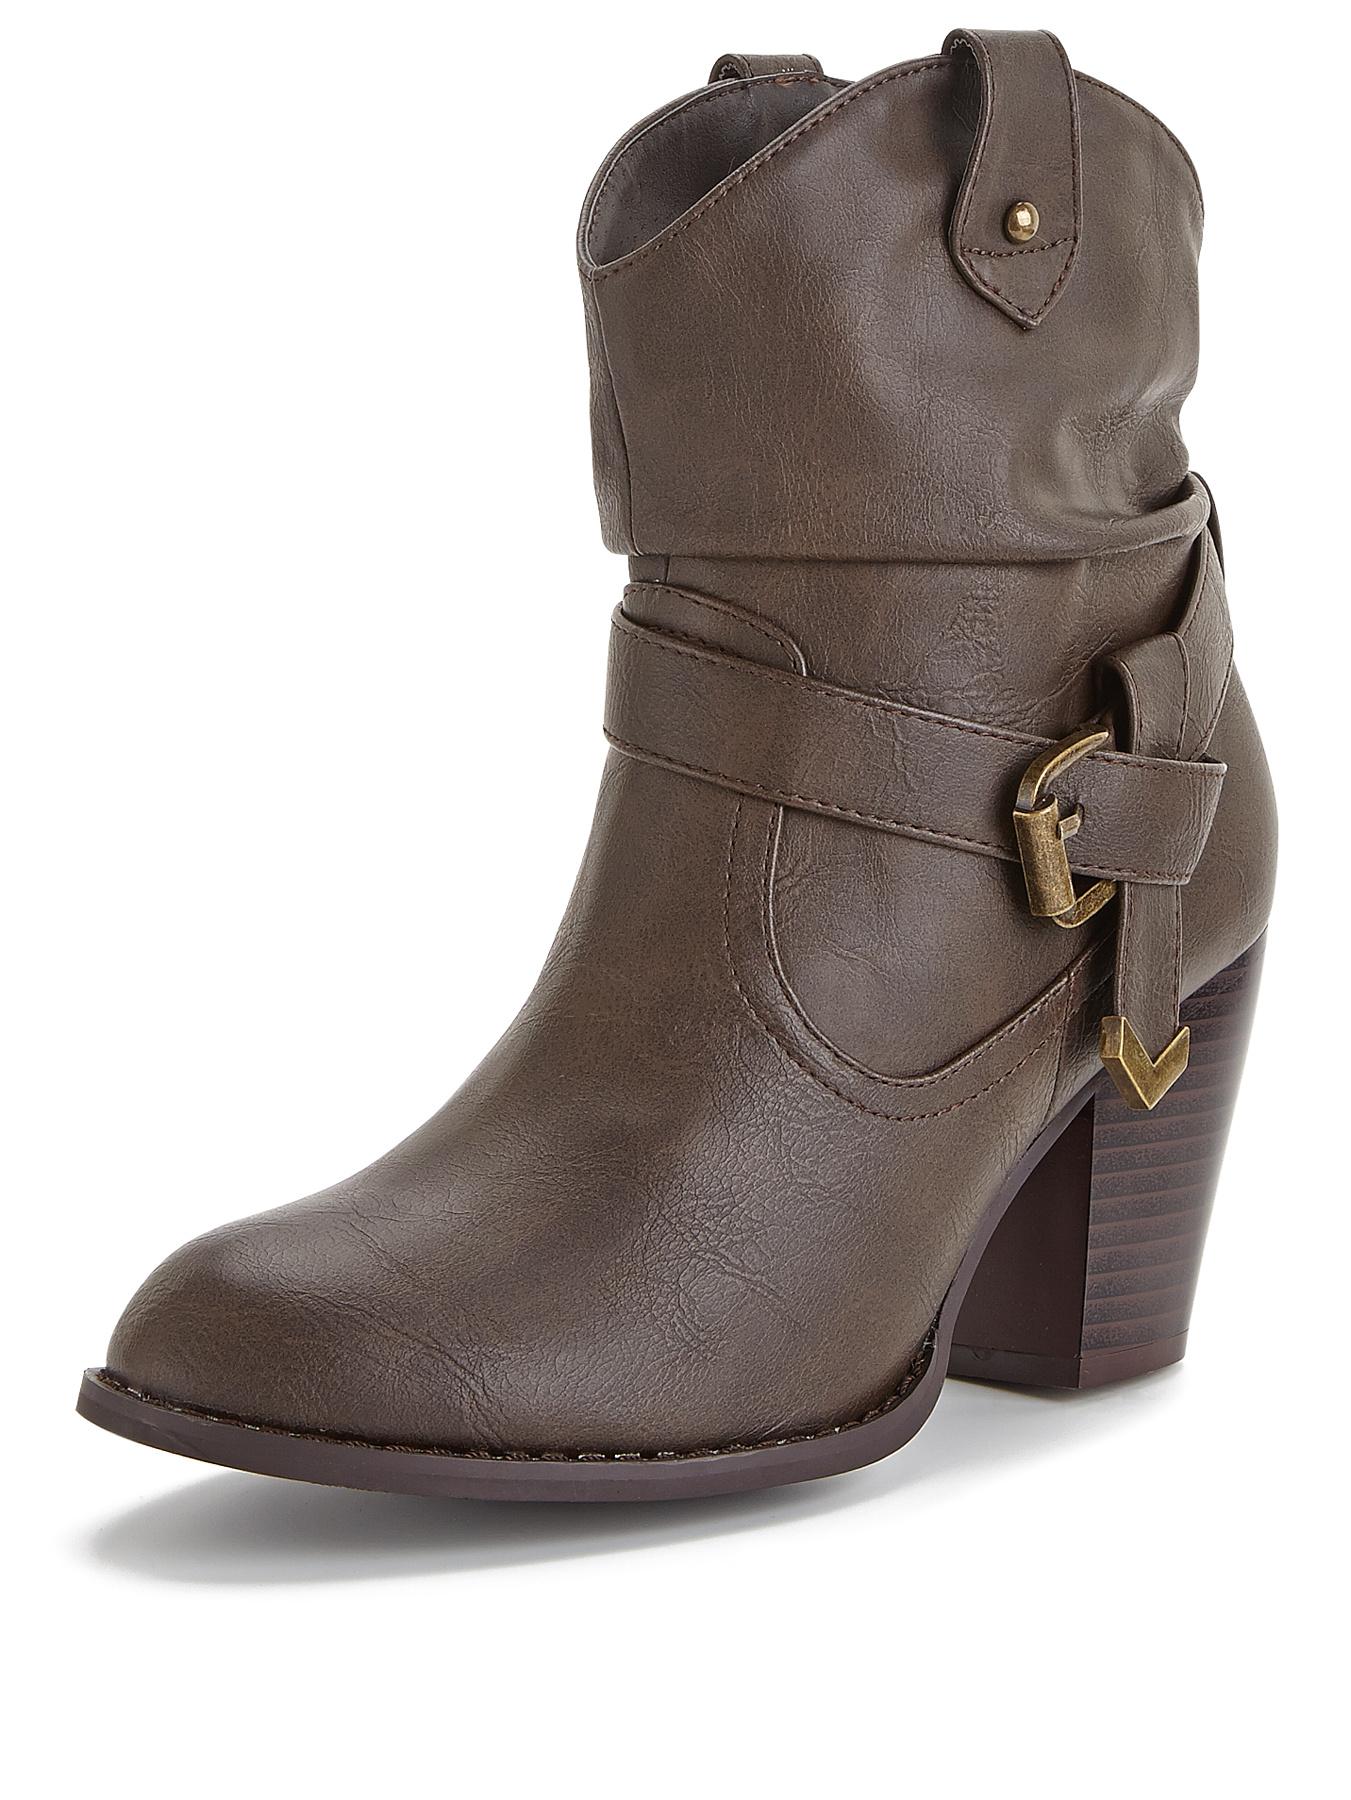 Womens Boots | Boots for Women - Littlewoods